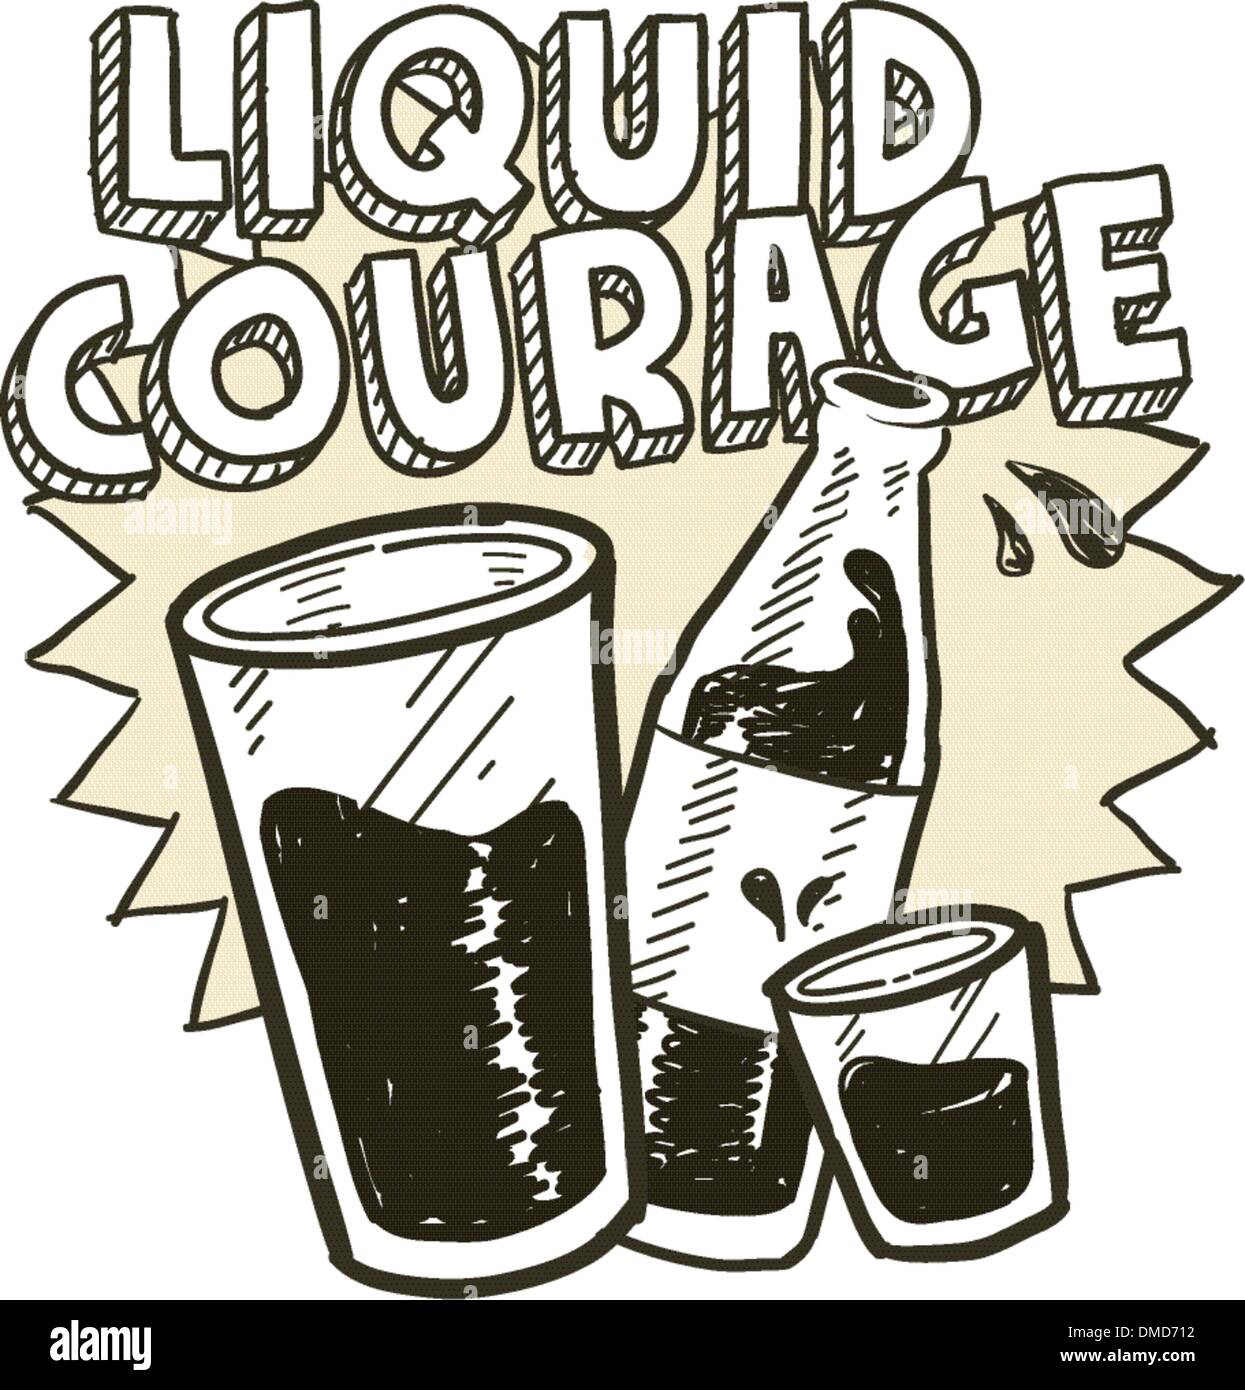 Liquid courage alcohol sketch Stock Vector